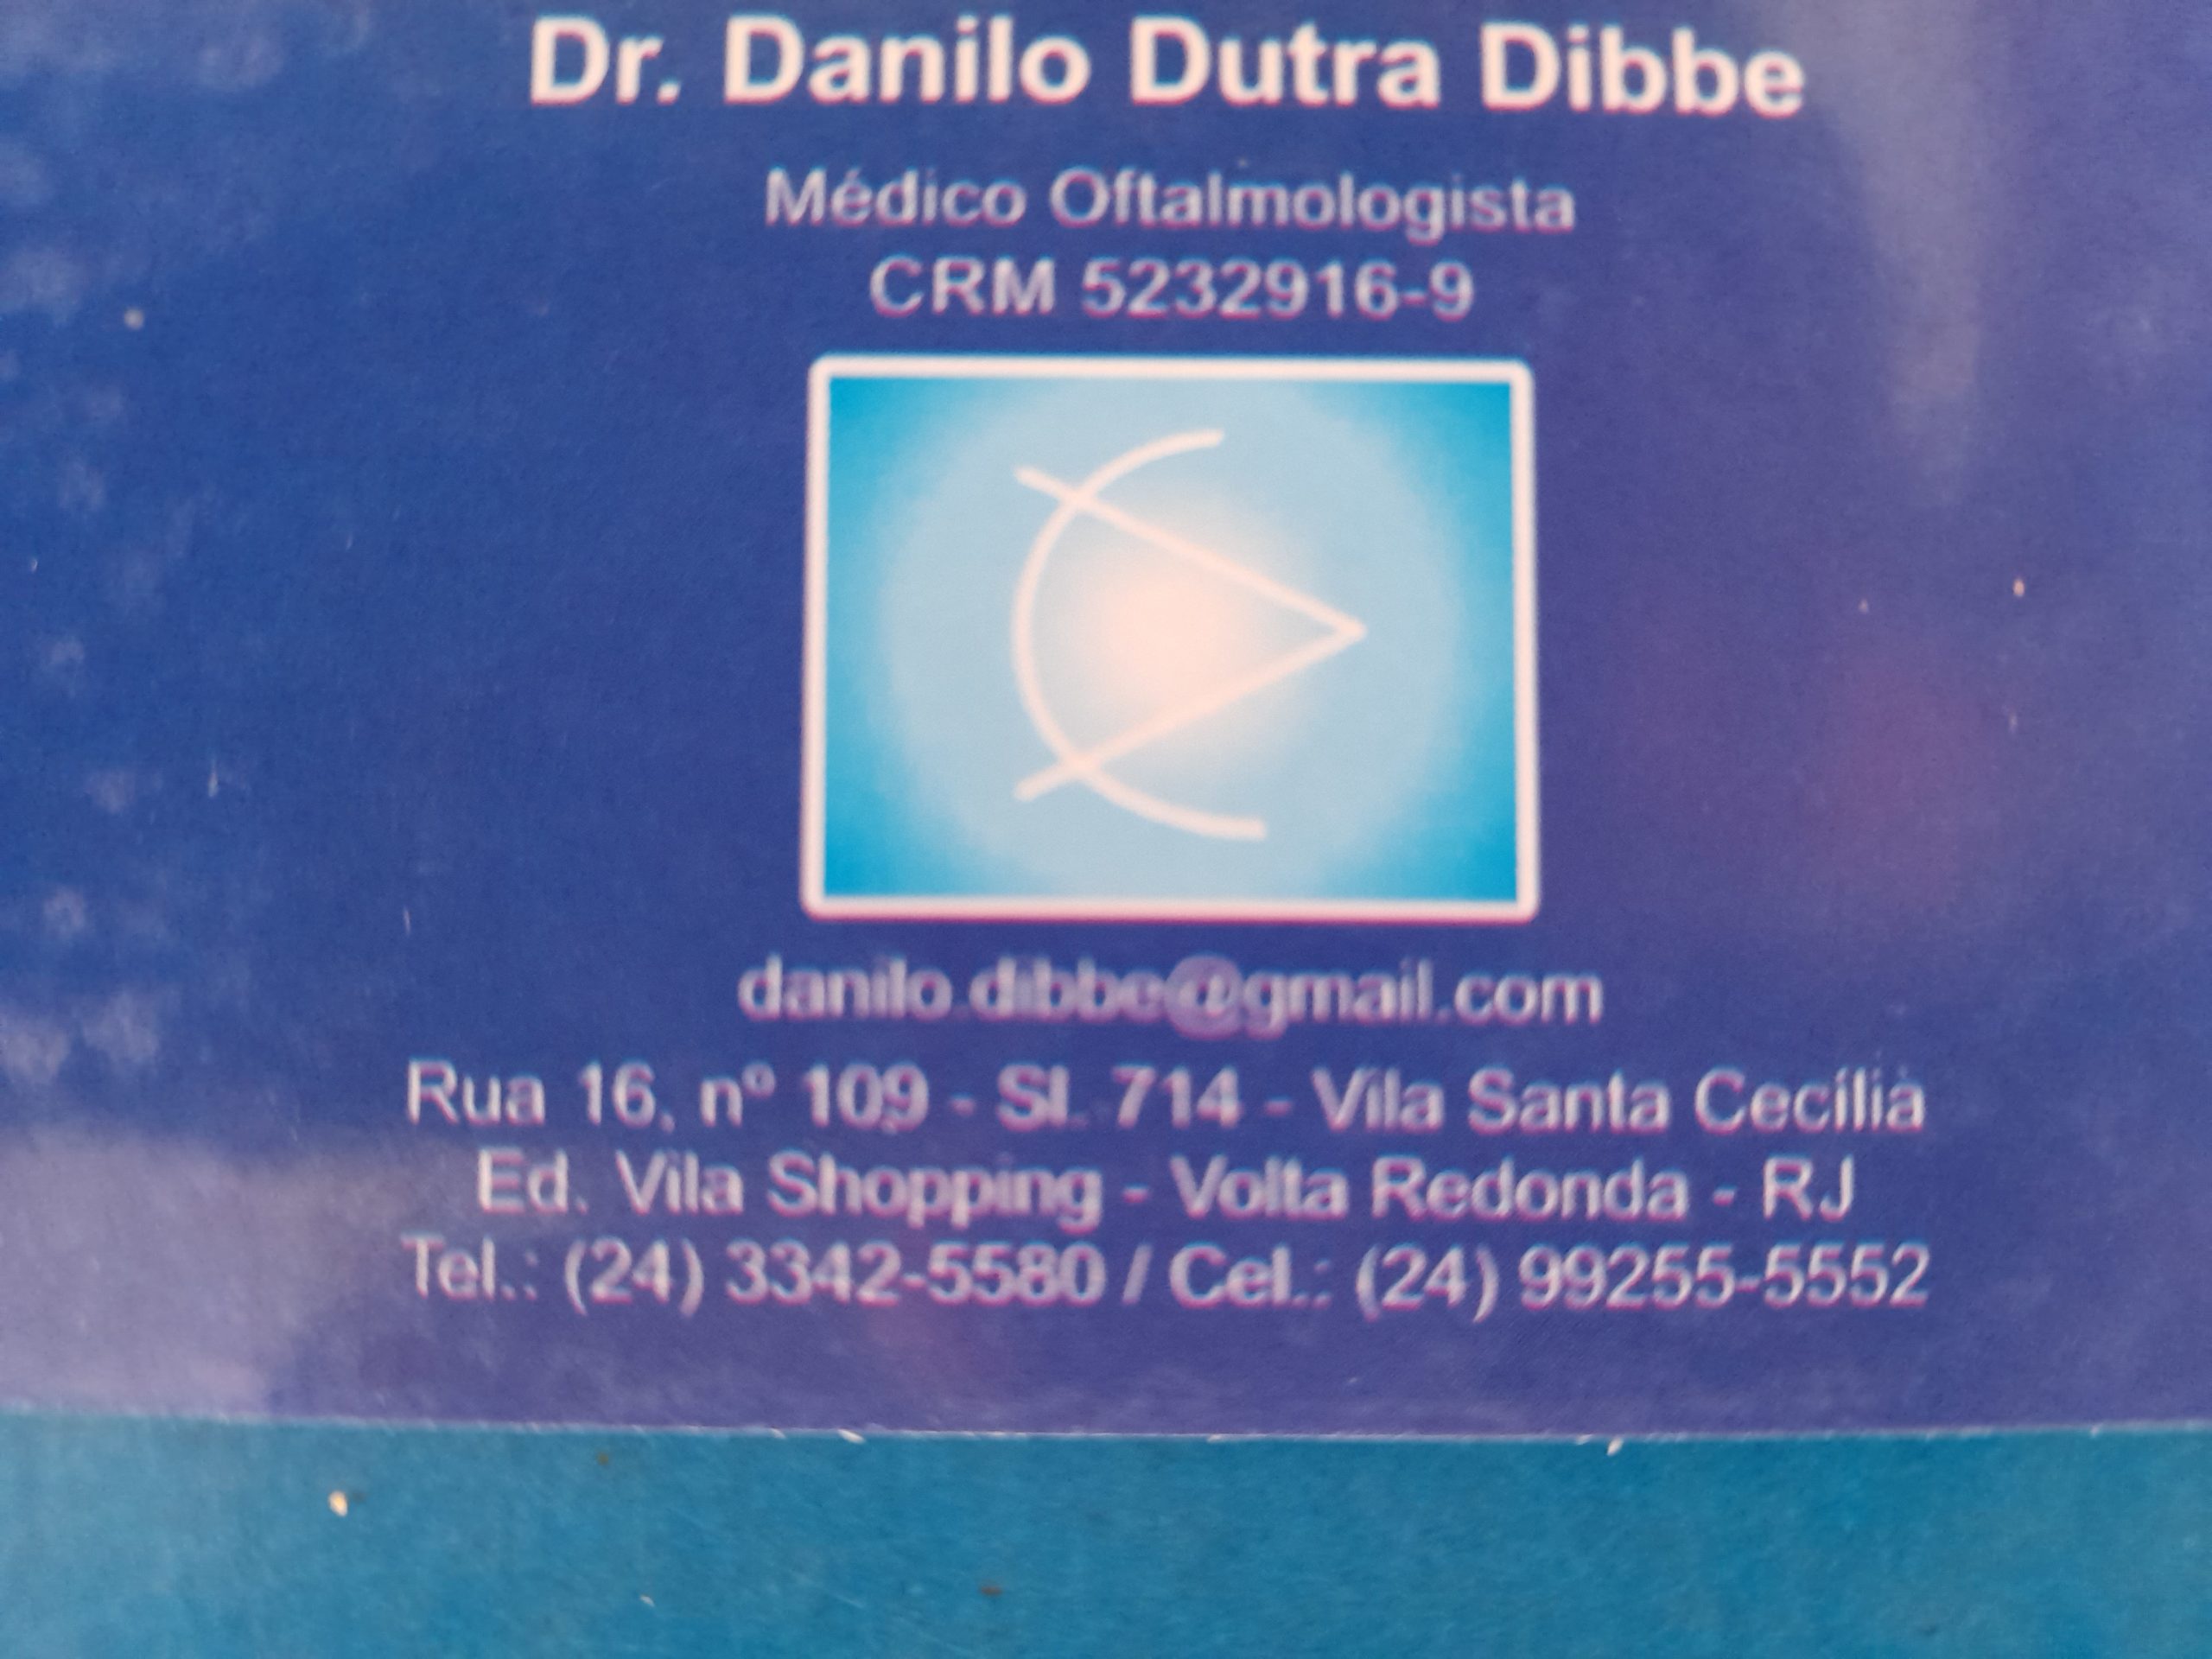 Dr. Danilo Dutra Dibbe - Volta Redonda - RJ